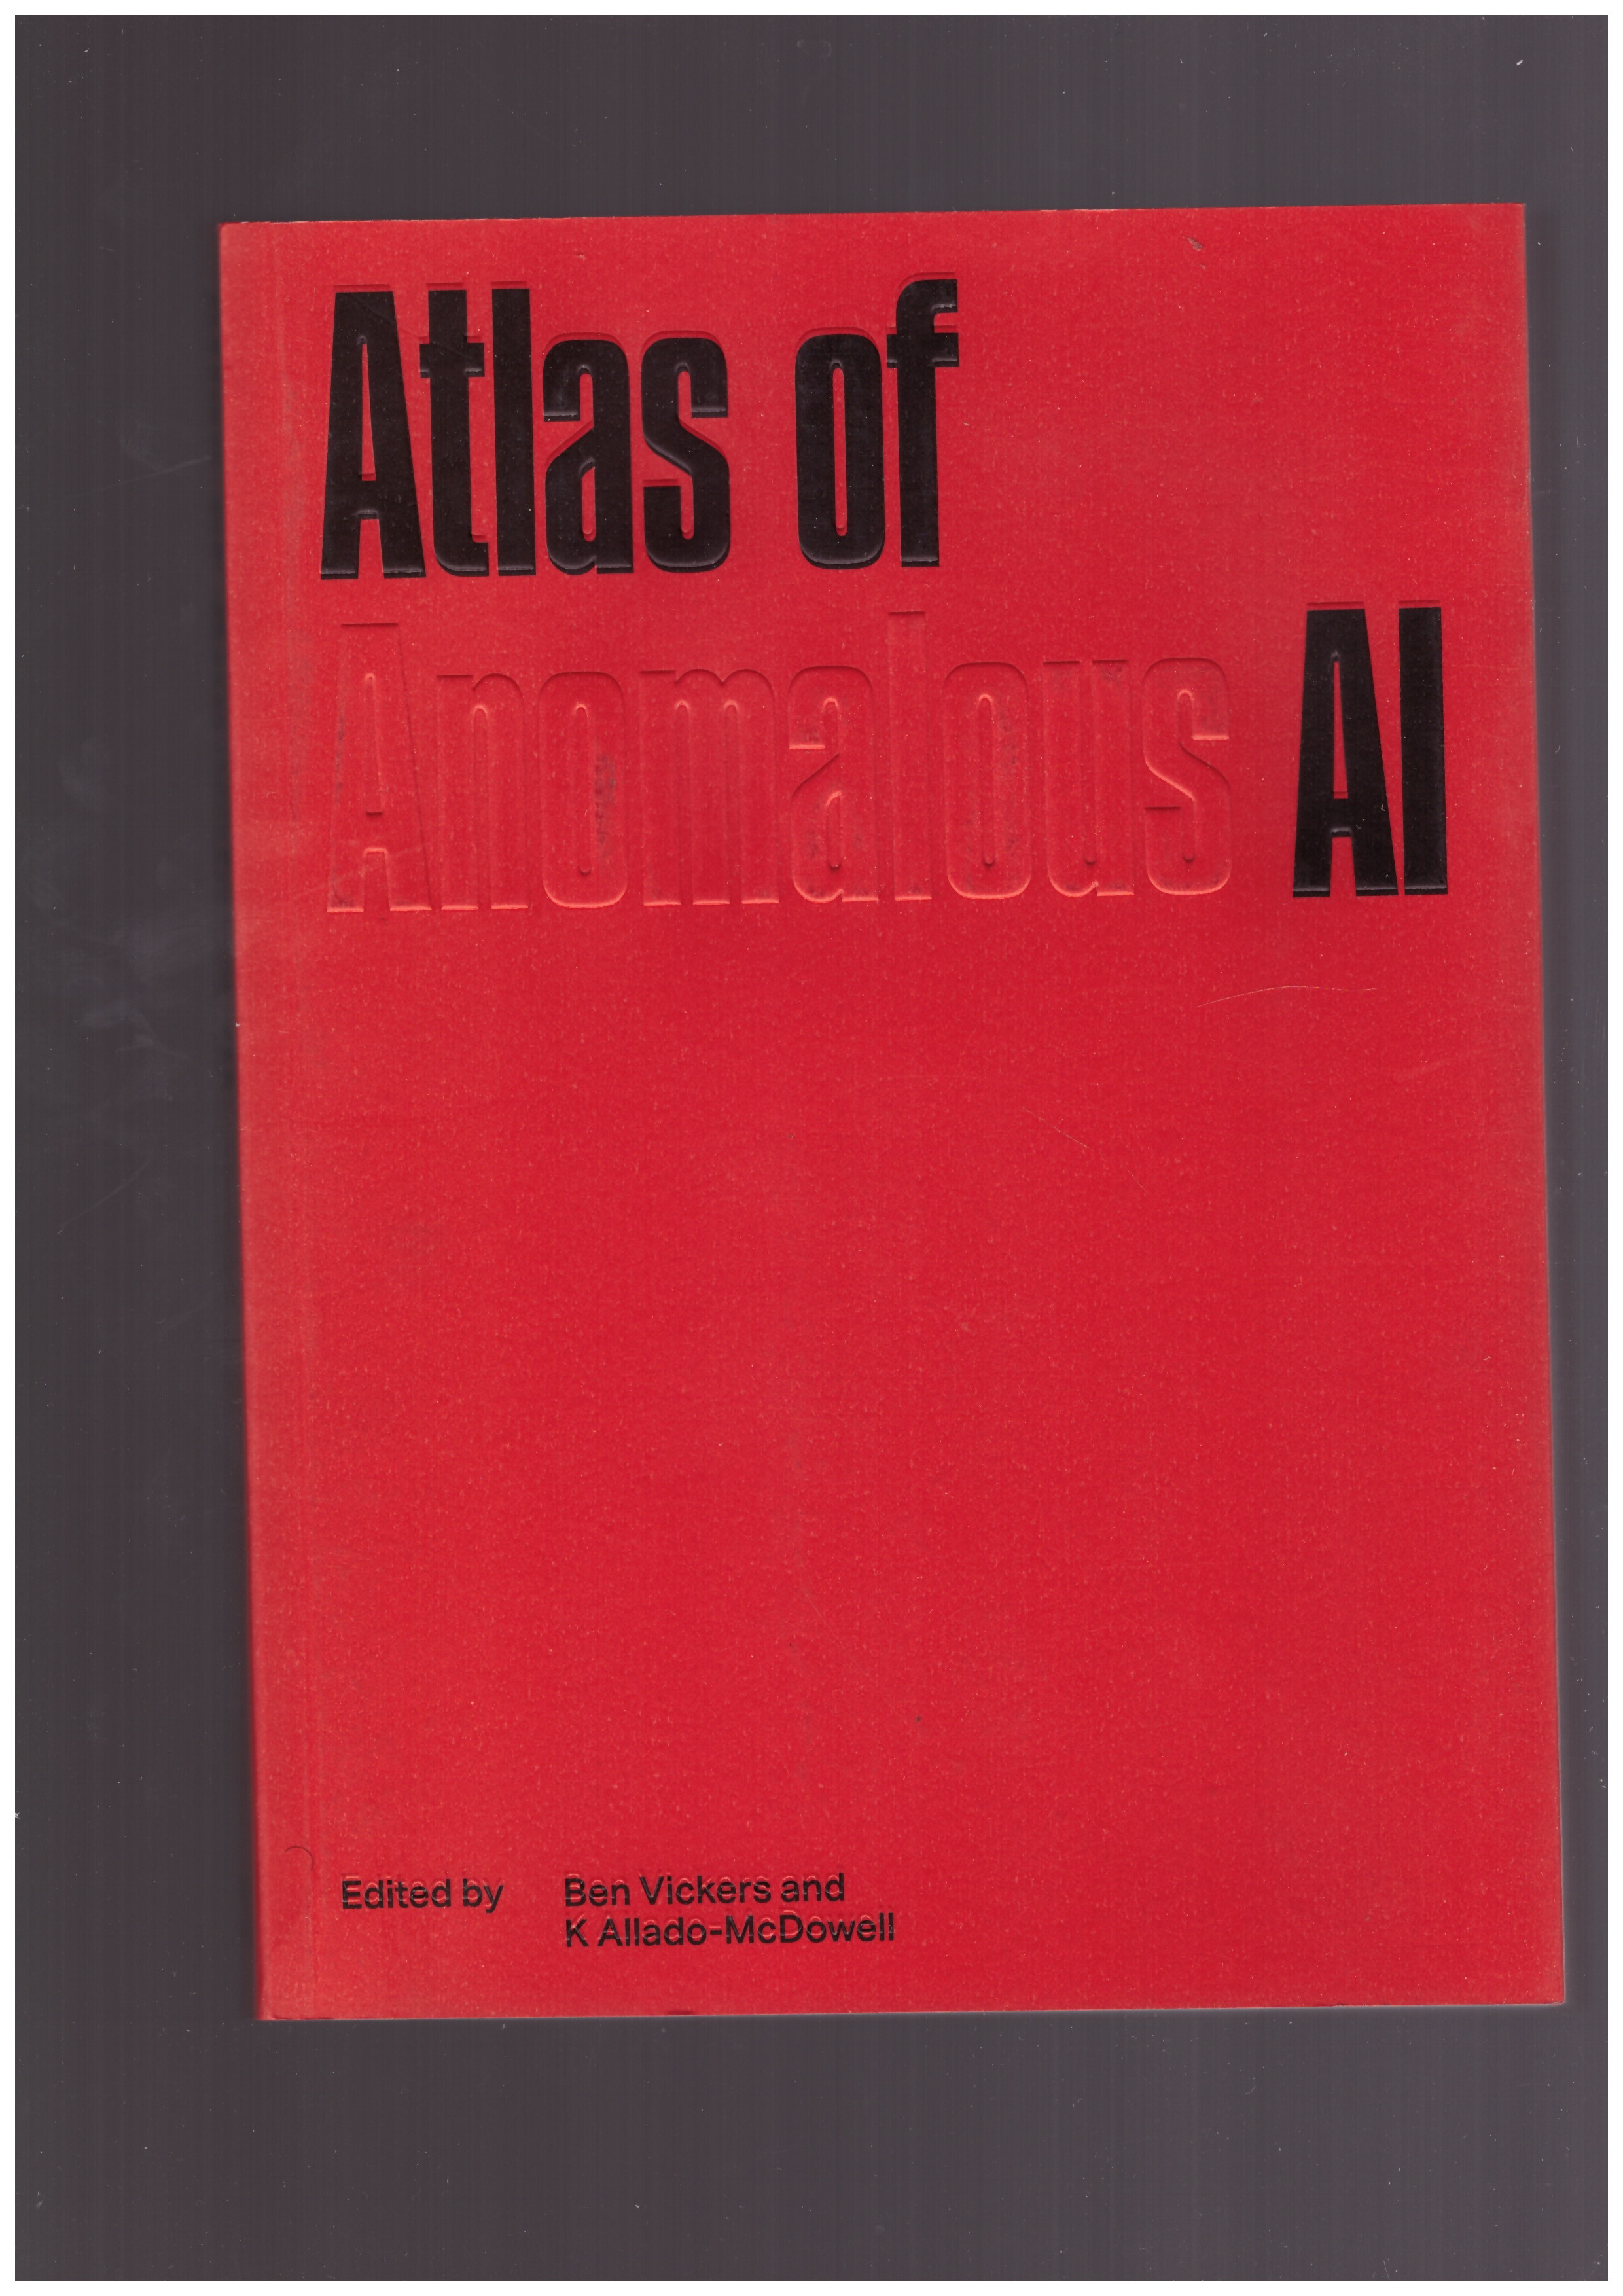 VICKERS, Ben; ALLADO-MCDOWELL, K (eds). - Atlas of Anomalous AI